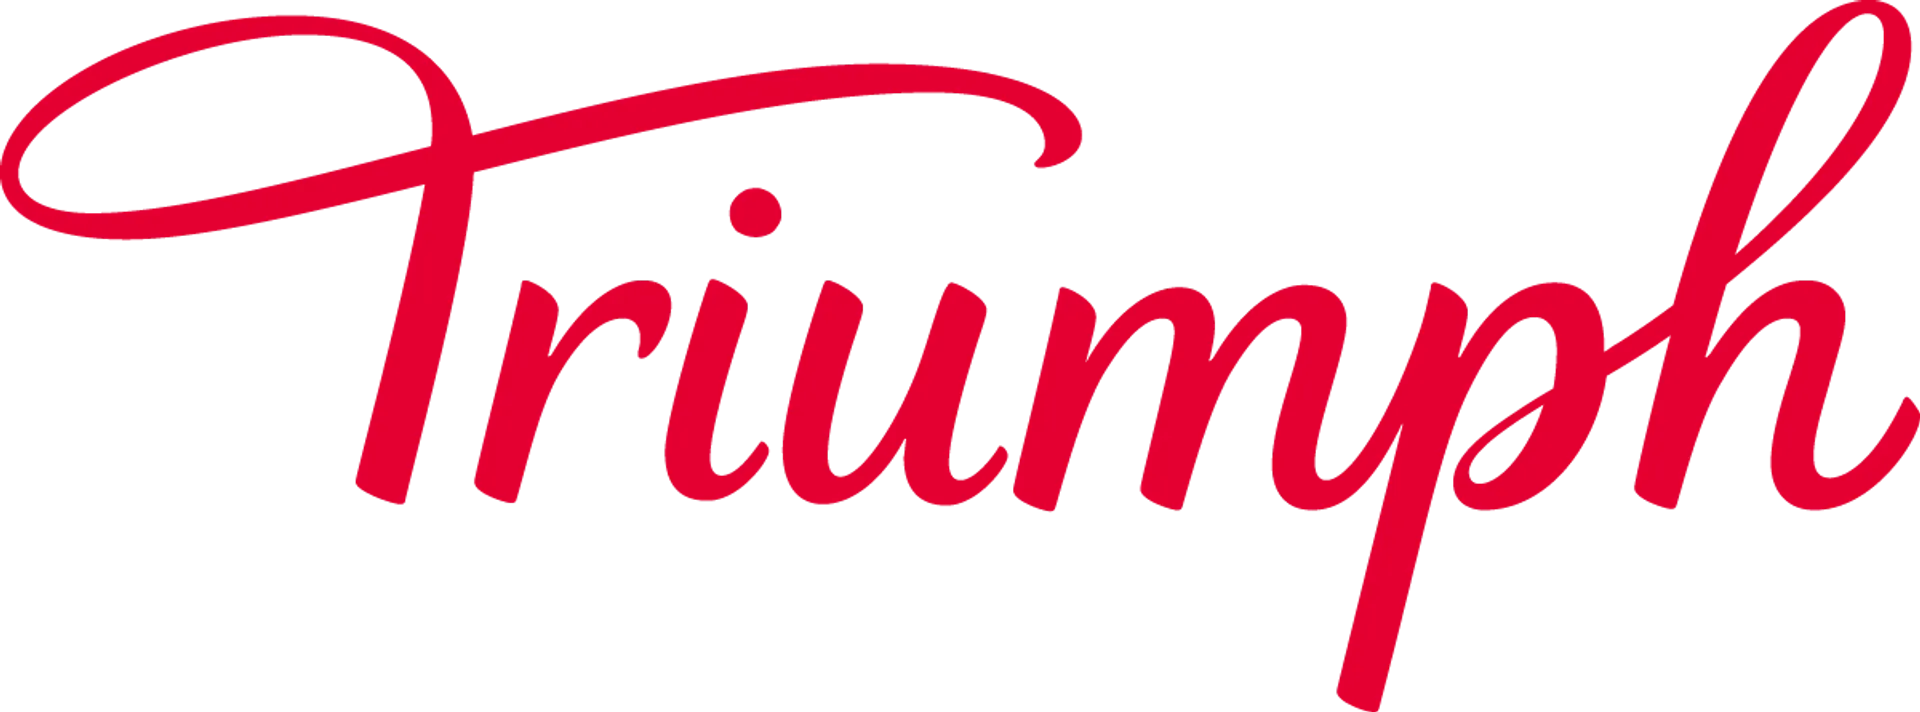 TRIUMPH logo